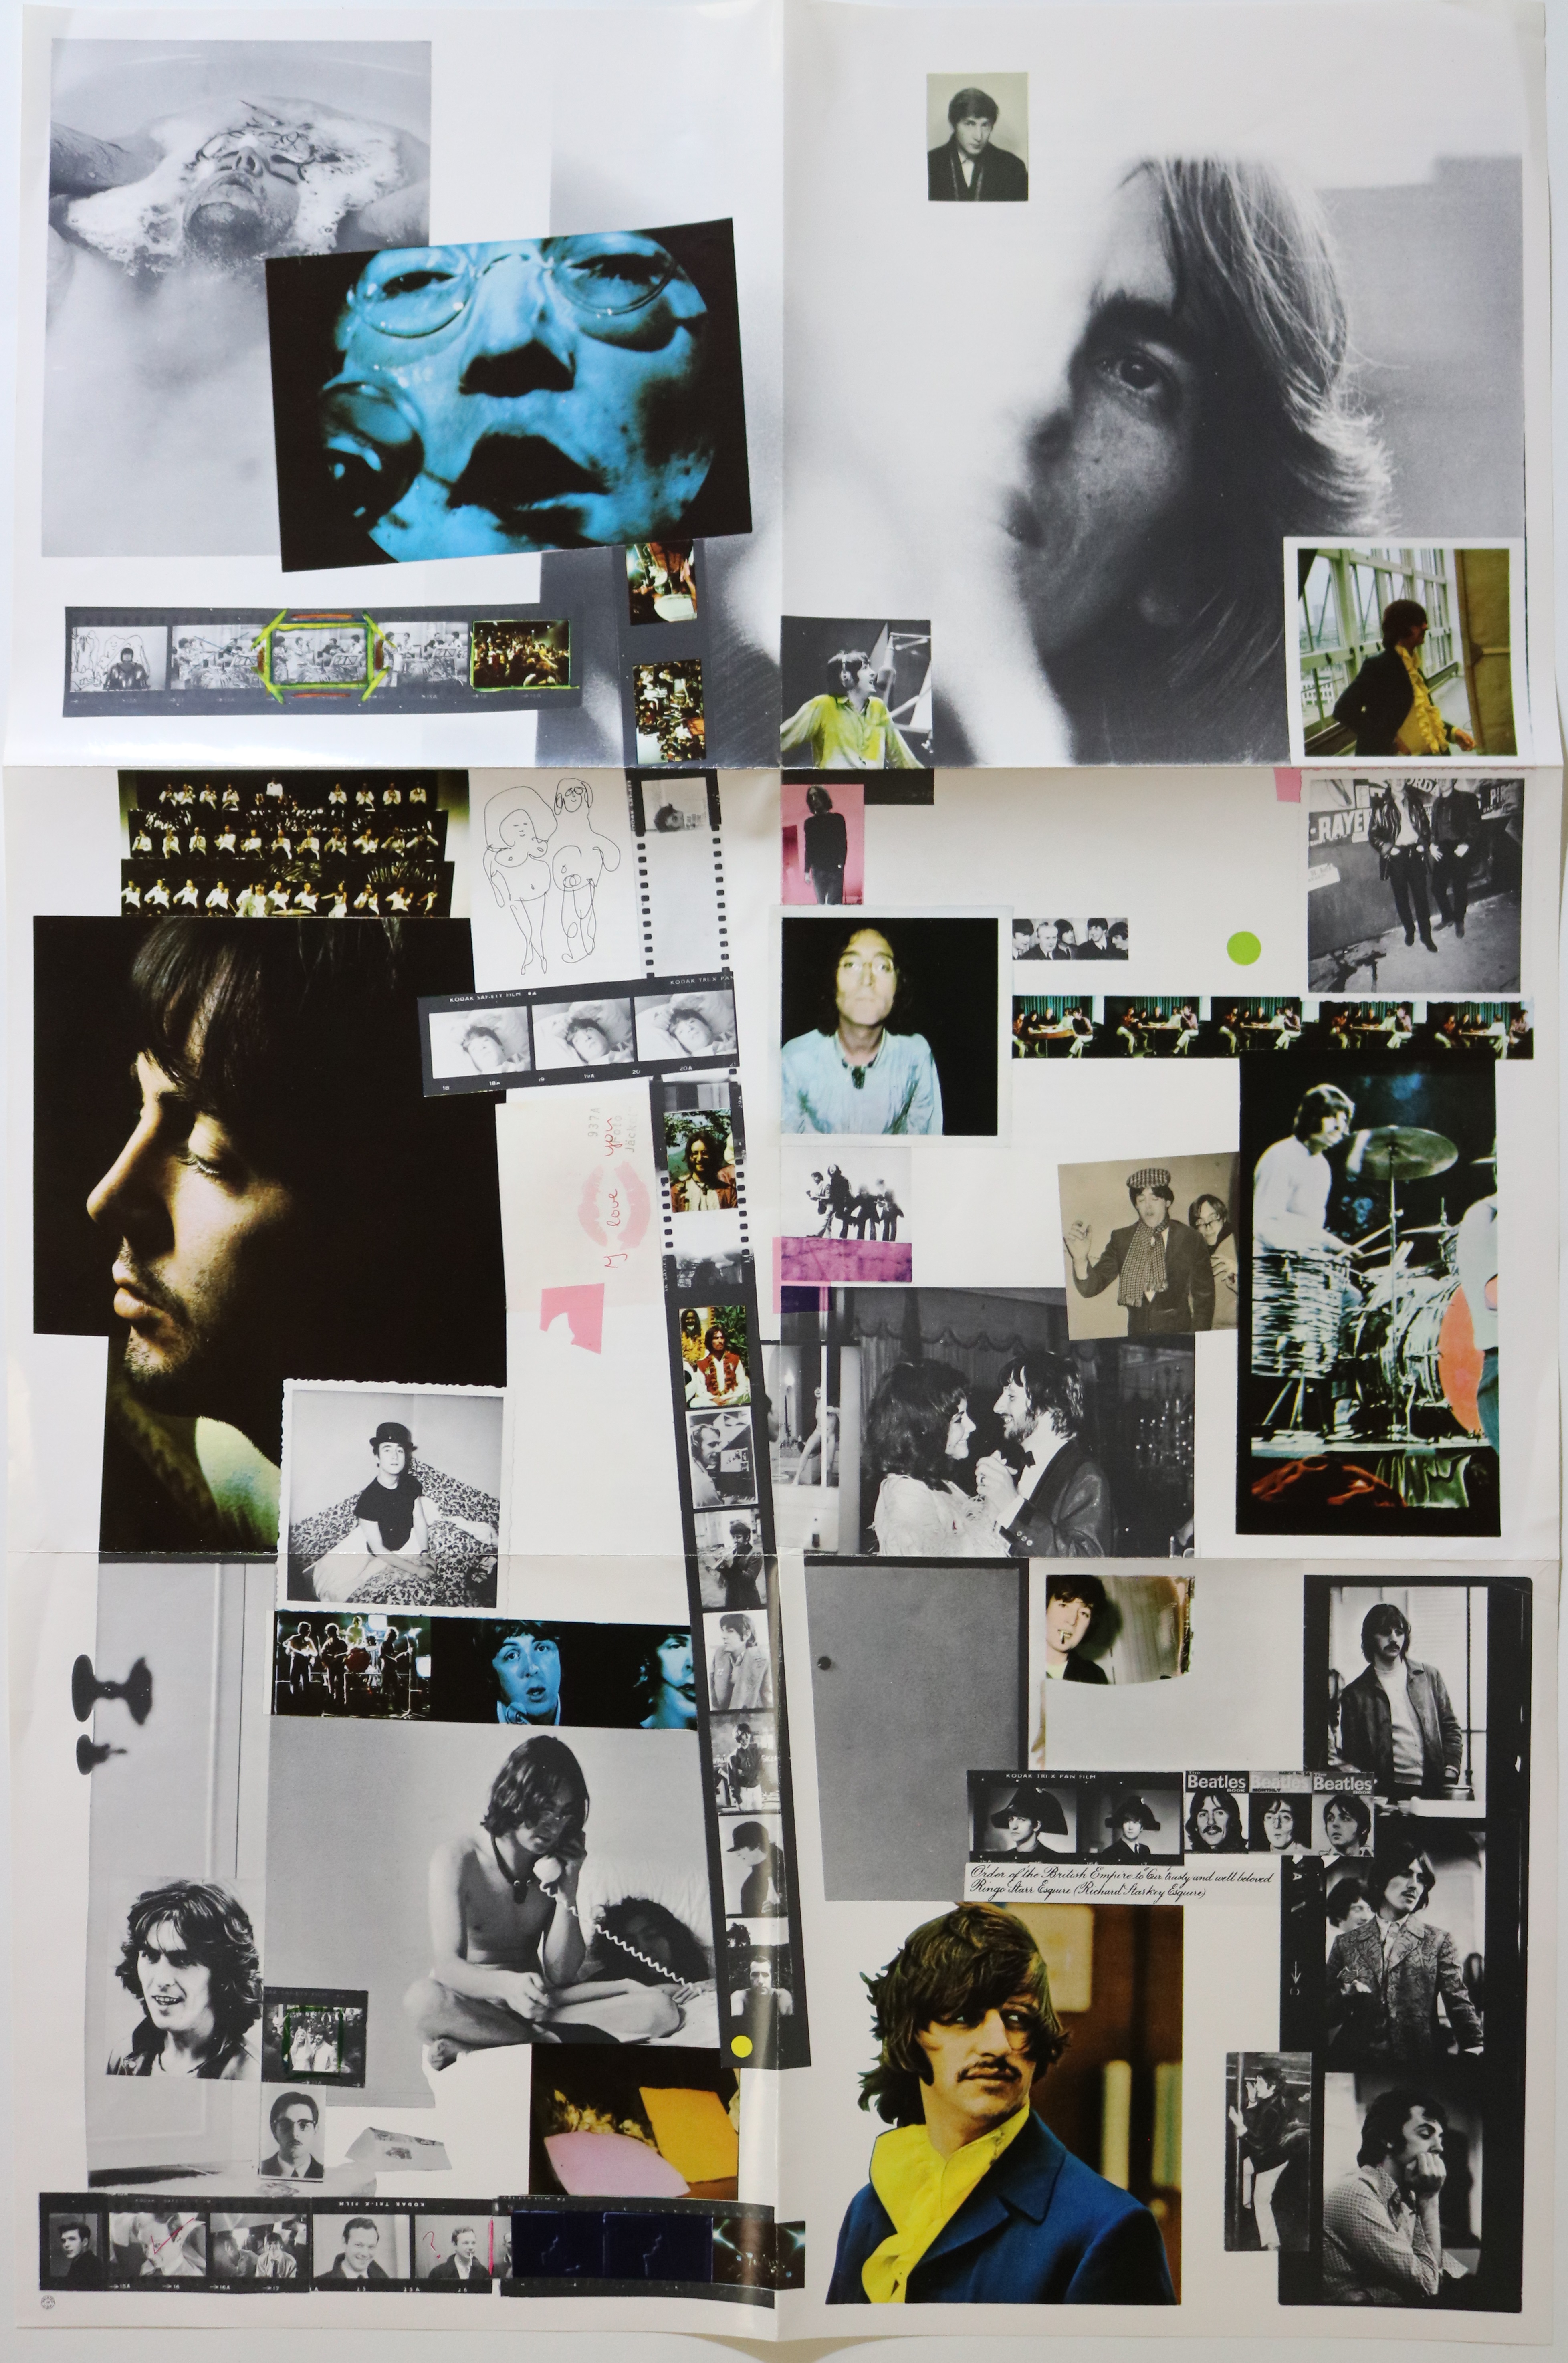 THE BEATLES - THE BEATLES (WHITE ALBUM) - US '2ND' PRESSING LP (APPLE SWBO-101). - Image 8 of 9